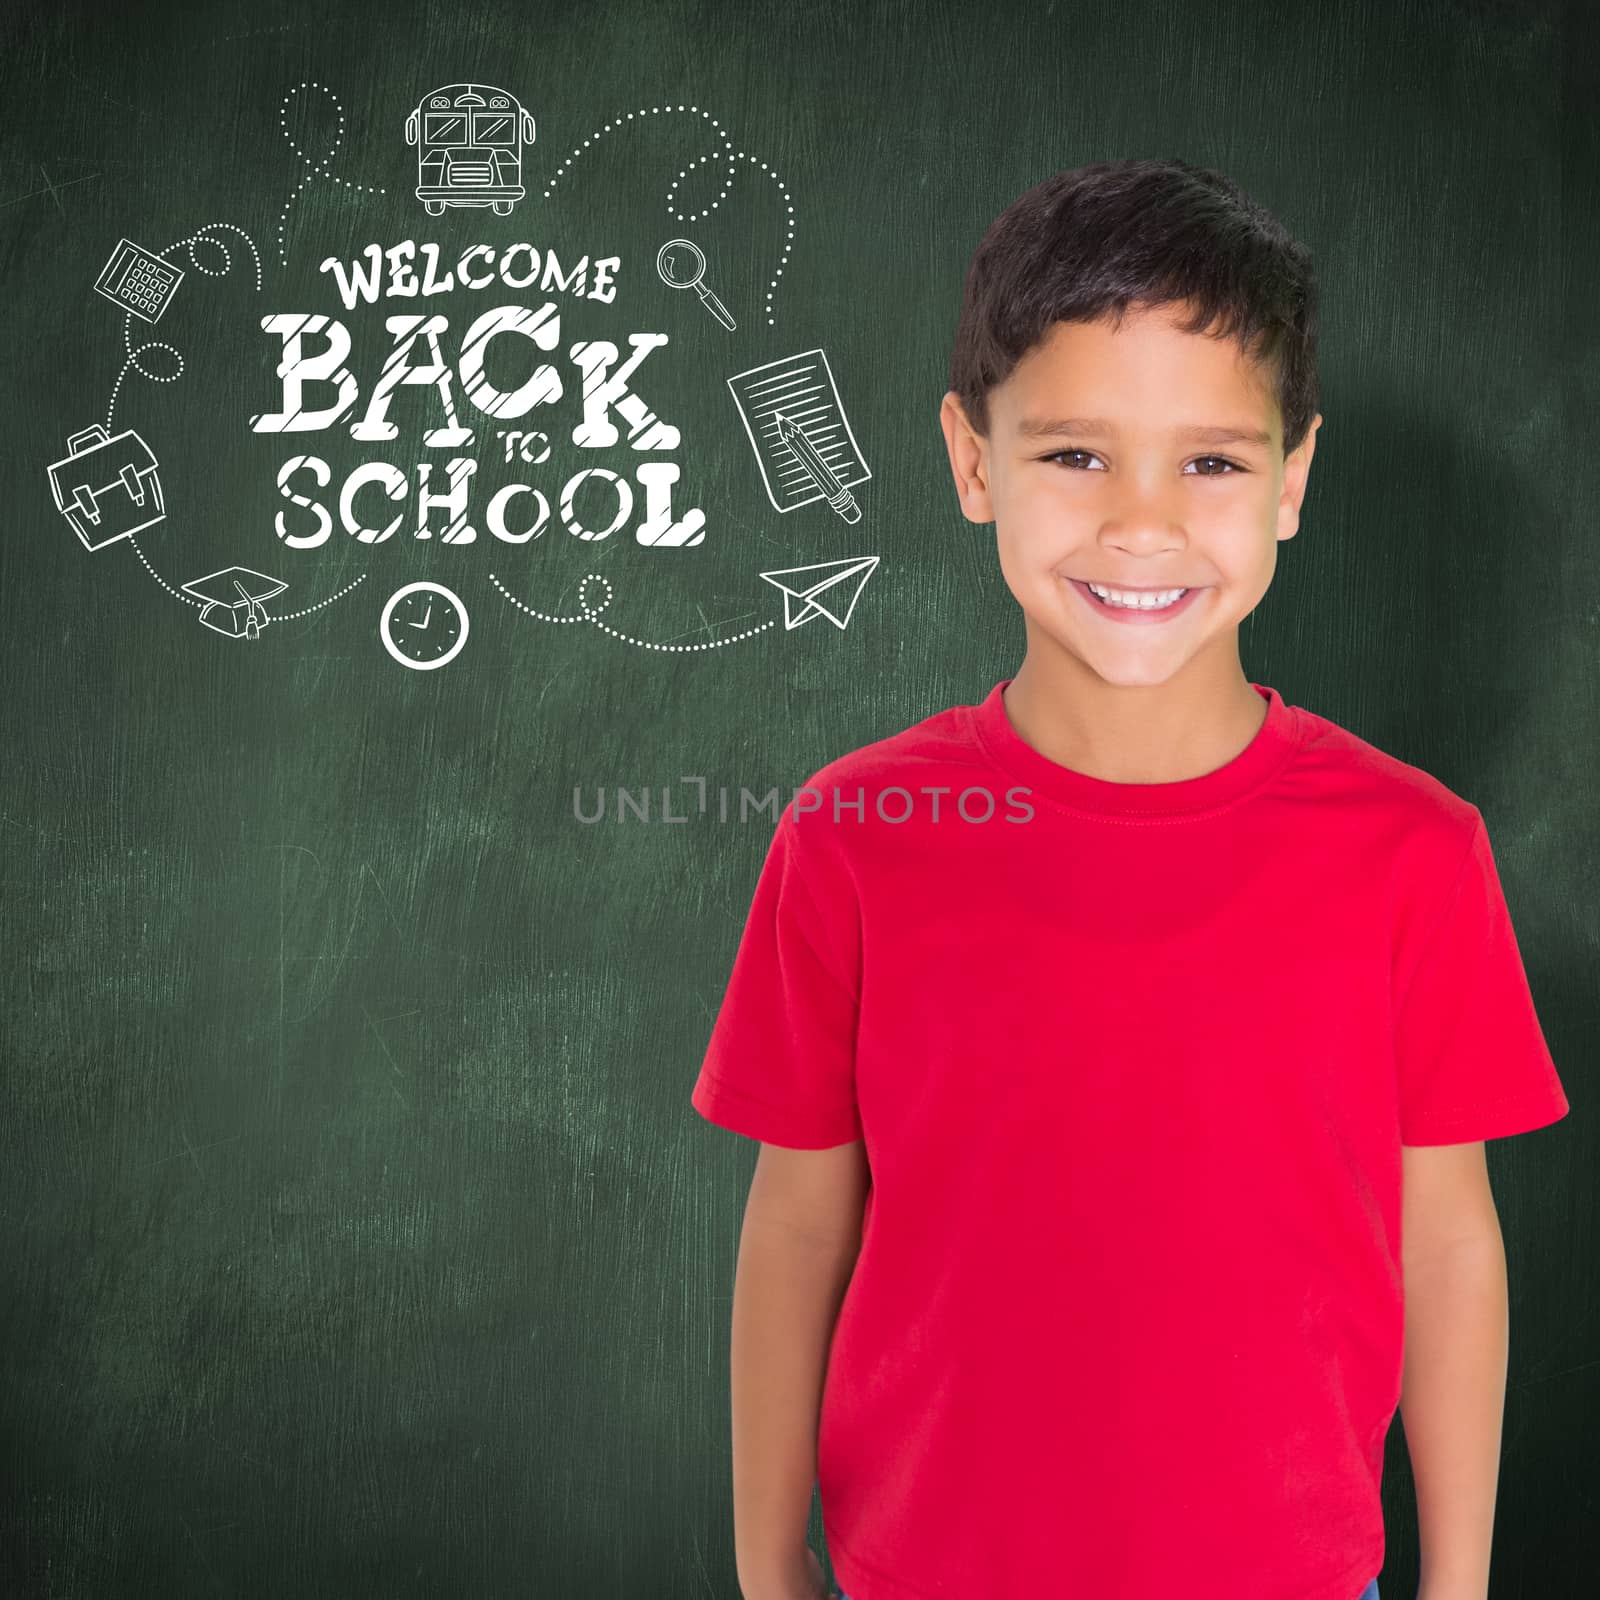 Cute boy smiling at camera against green chalkboard